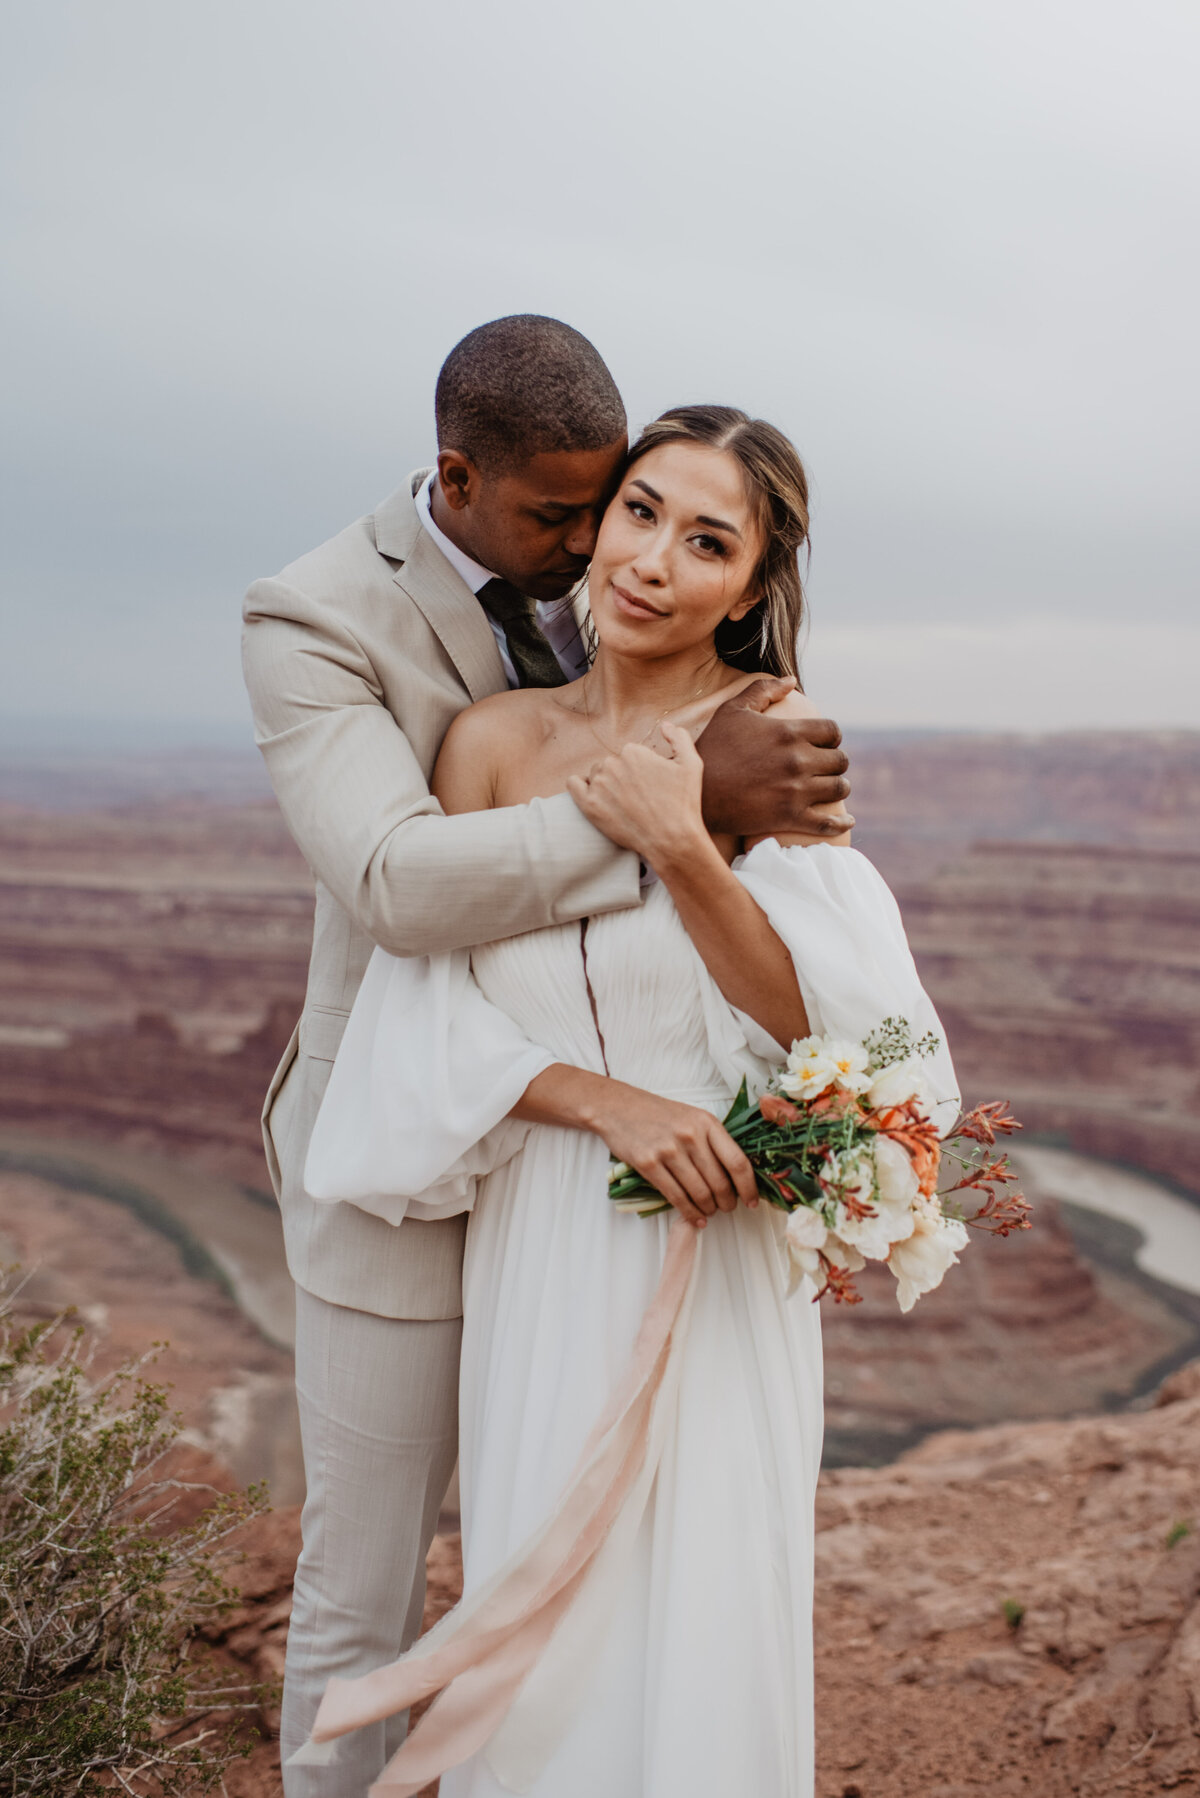 Utah Elopement Photographer captures couple embracing